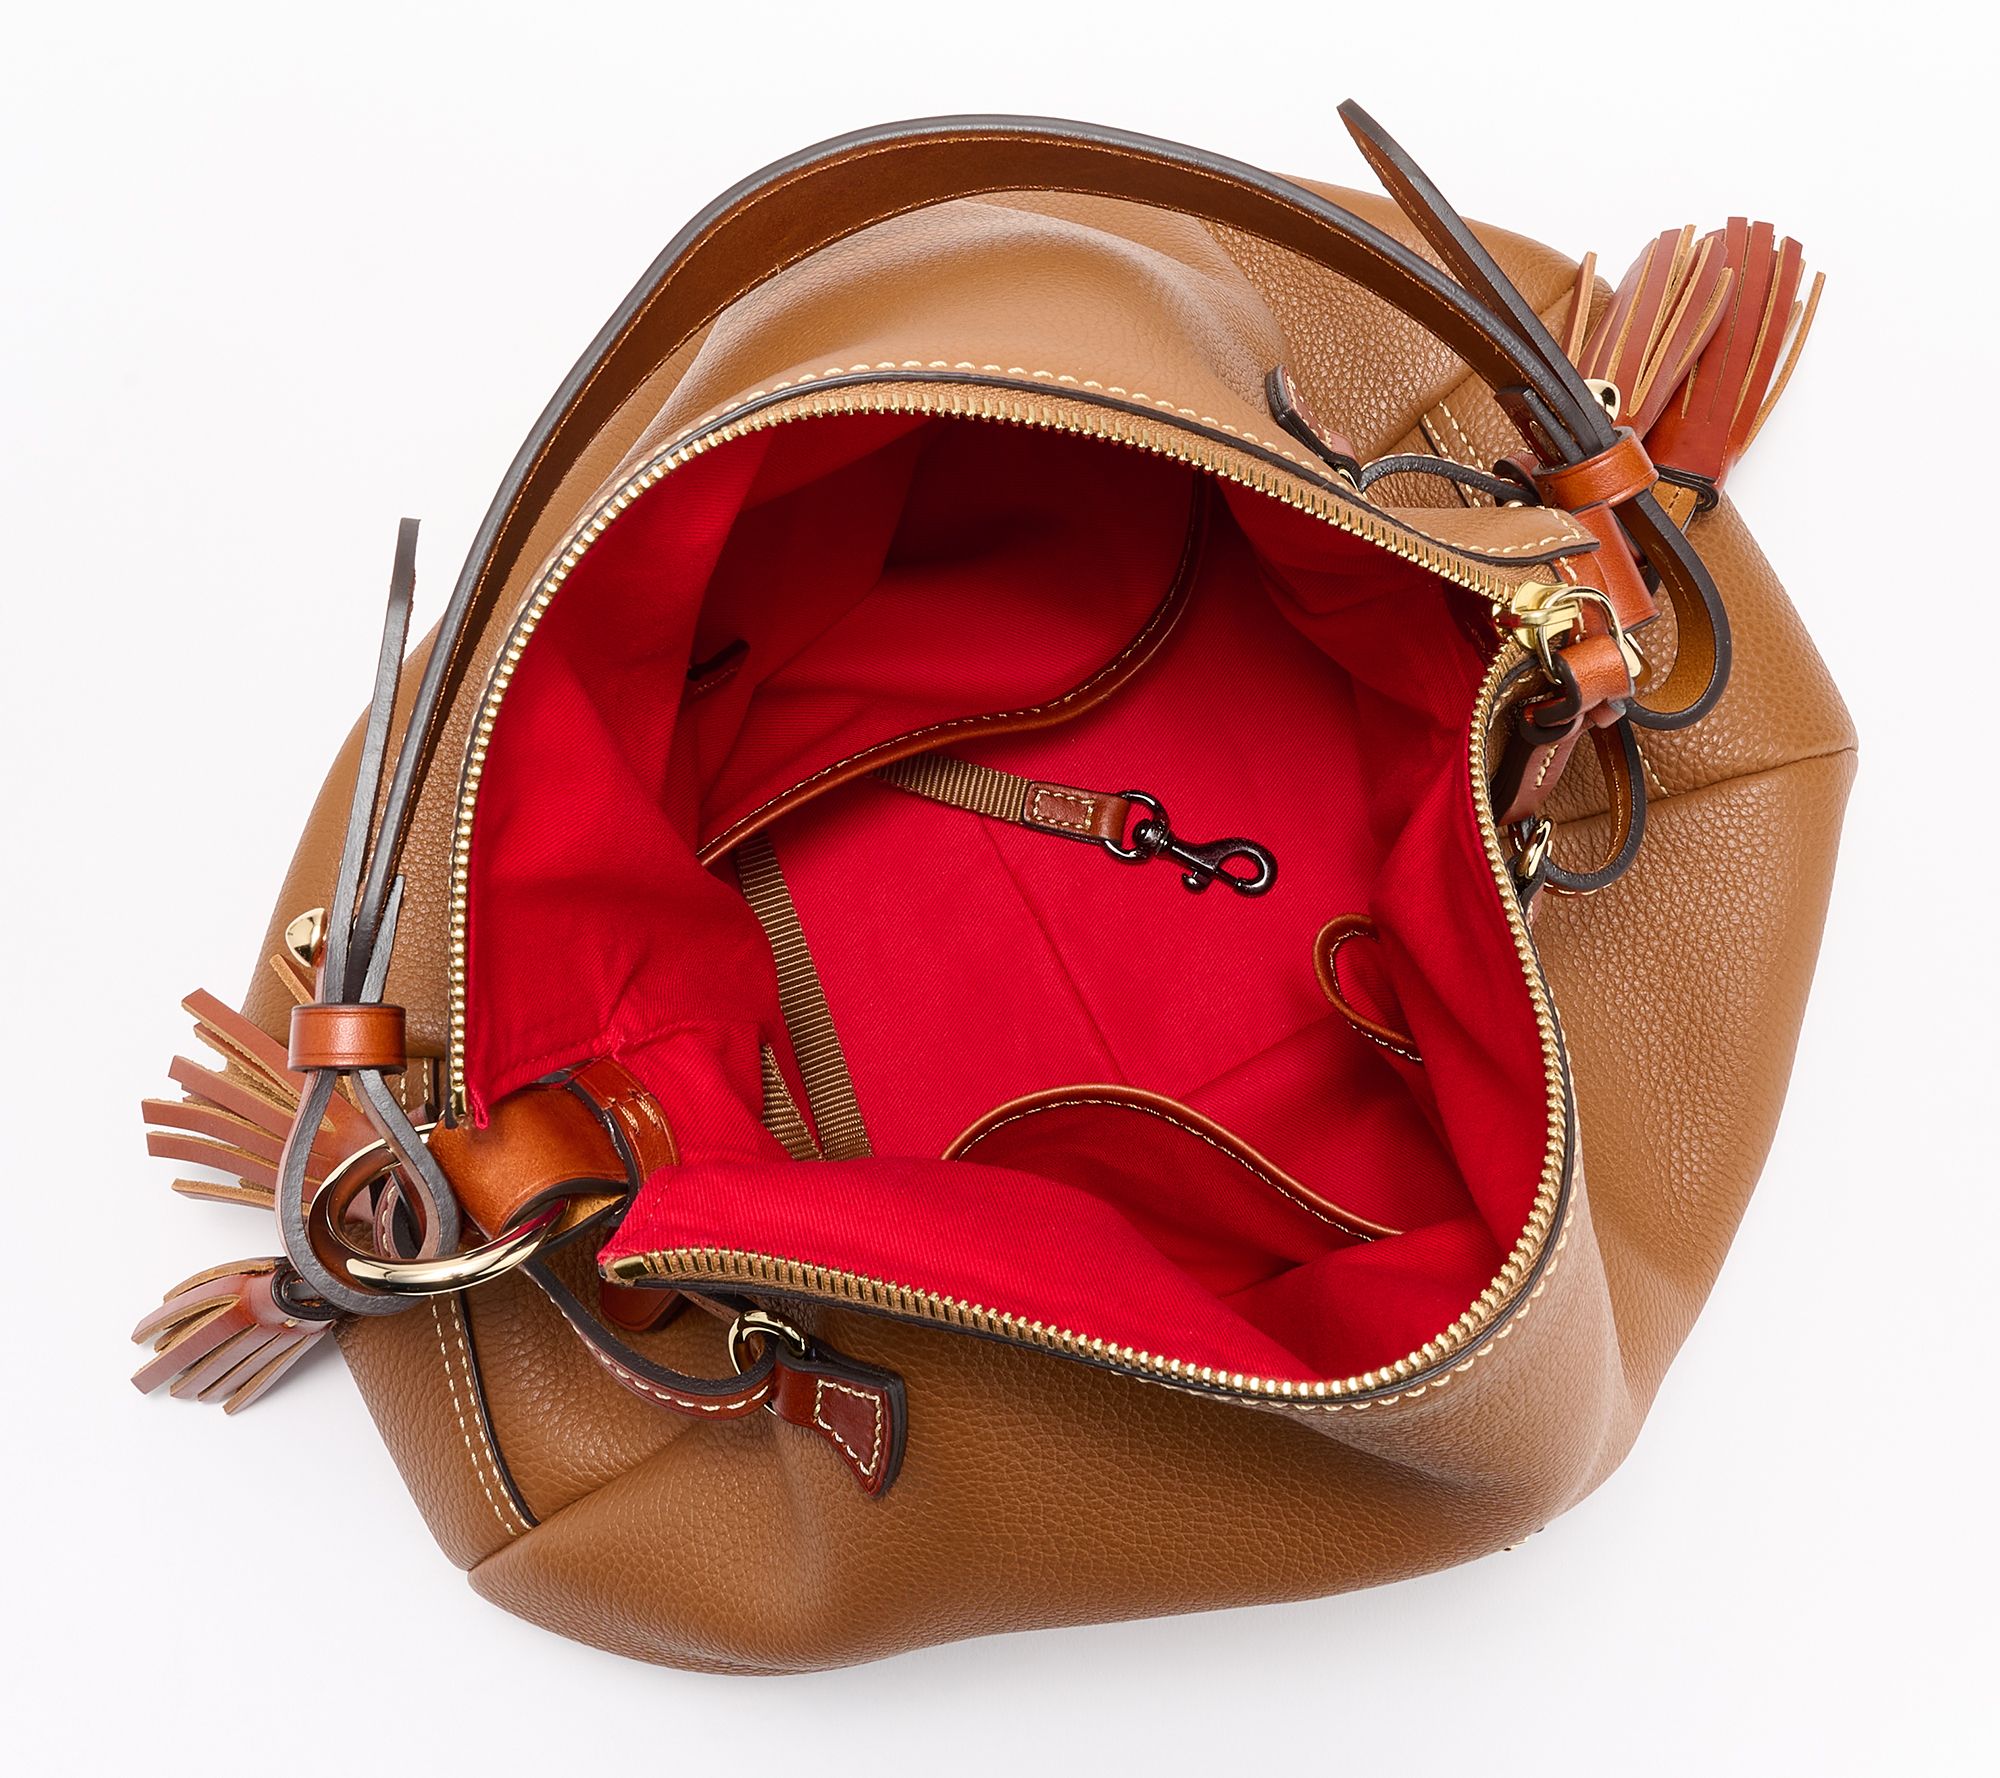 Dooney & Bourke Pebble Grain Leather Hobo Handbag Red